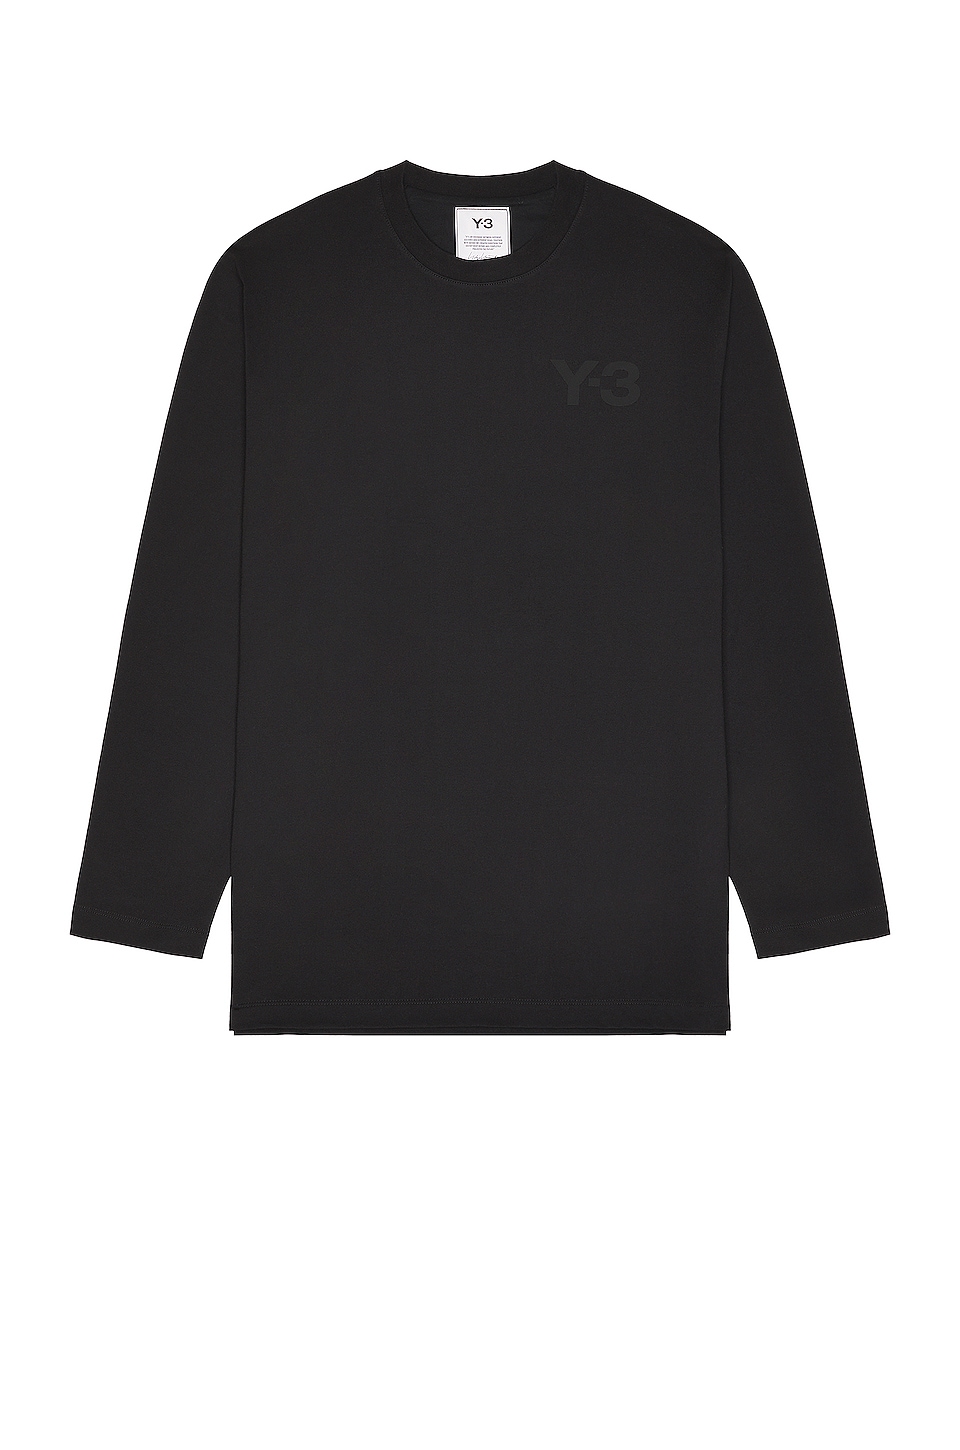 Y-3 Yohji Yamamoto Chest Logo Long Sleeve Tee in Black | REVOLVE